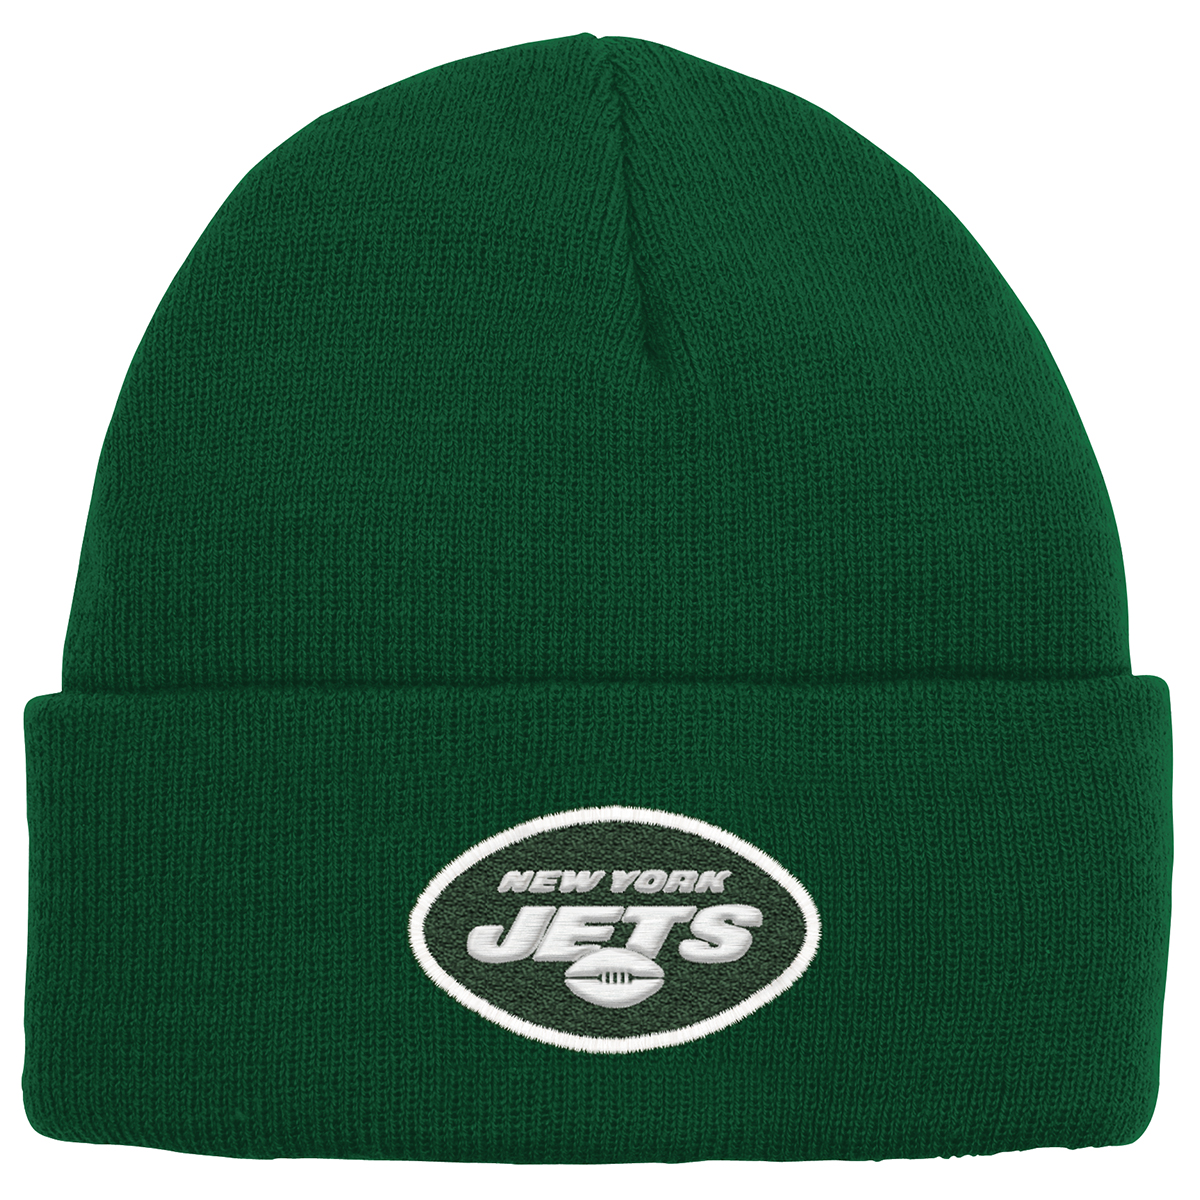 New York Jets Kids' Outerstuff Cuffed Knit Hat